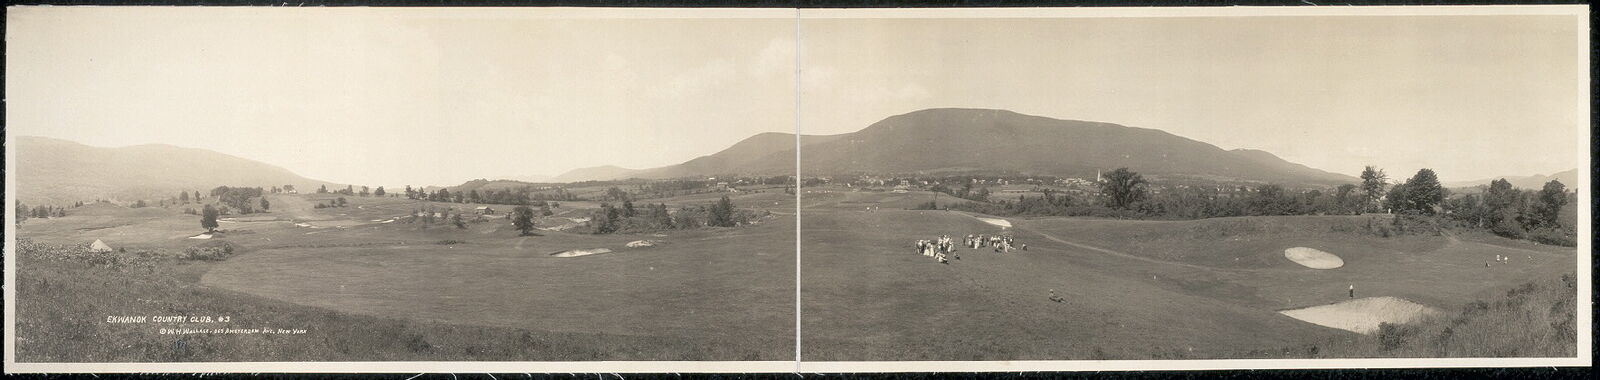 Photo:1911 Panoramic: Ekwanok Country Club, Manchester, Vermont 2